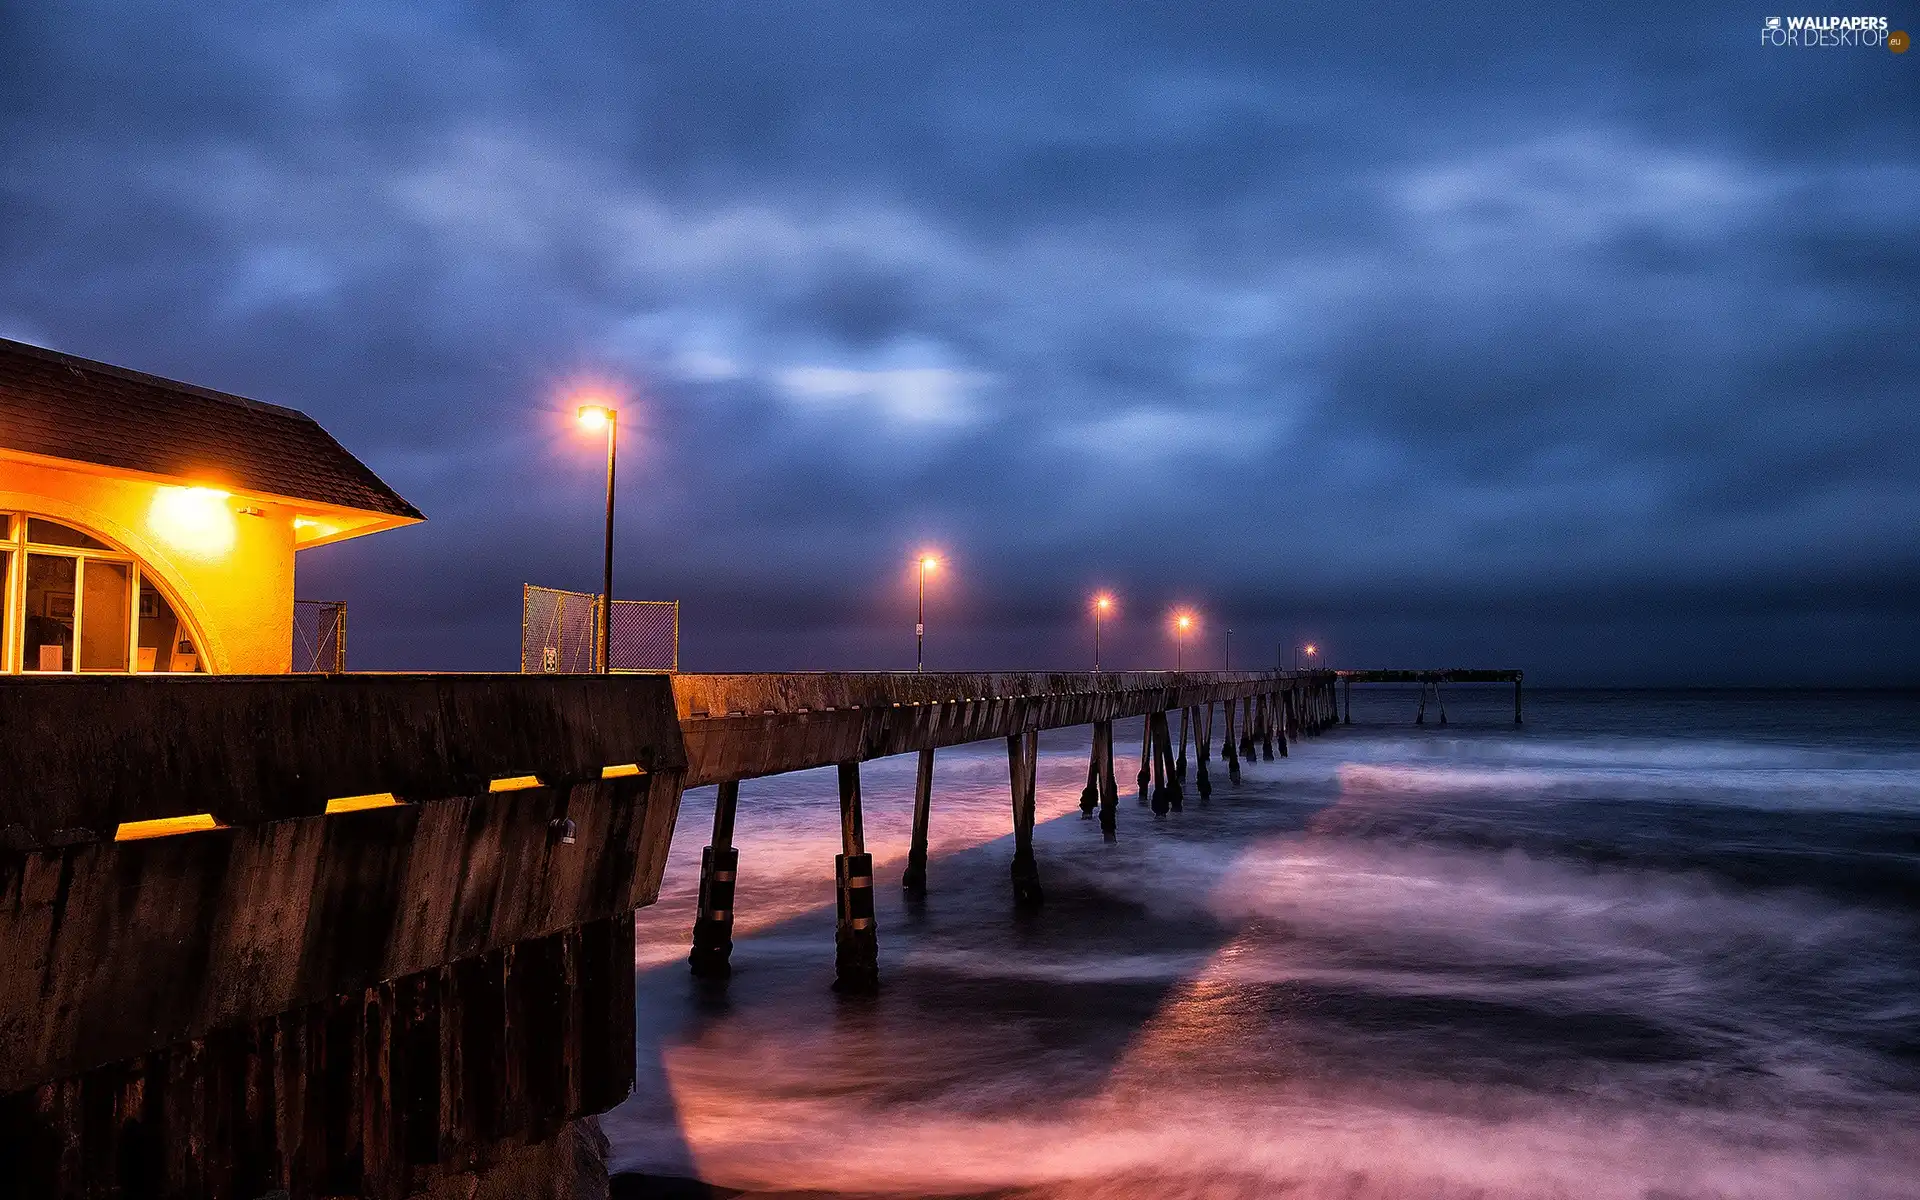 pier, Night, lanterns, sea